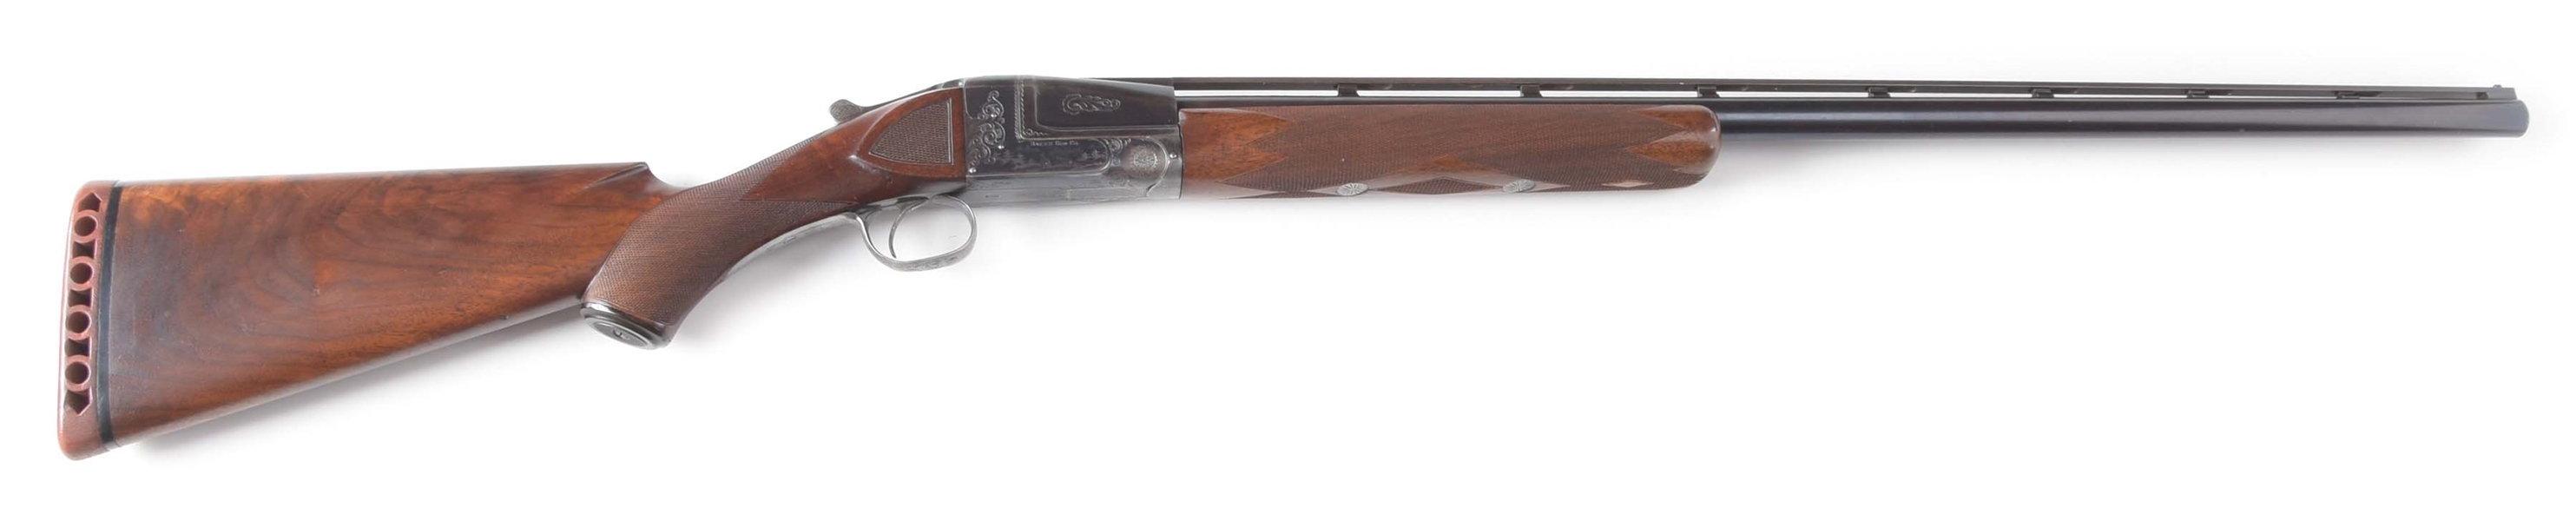 (C) BAKER GUN COMPANY "STERLING GRADE" SINGLE BARREL TRAP SHOTGUN.